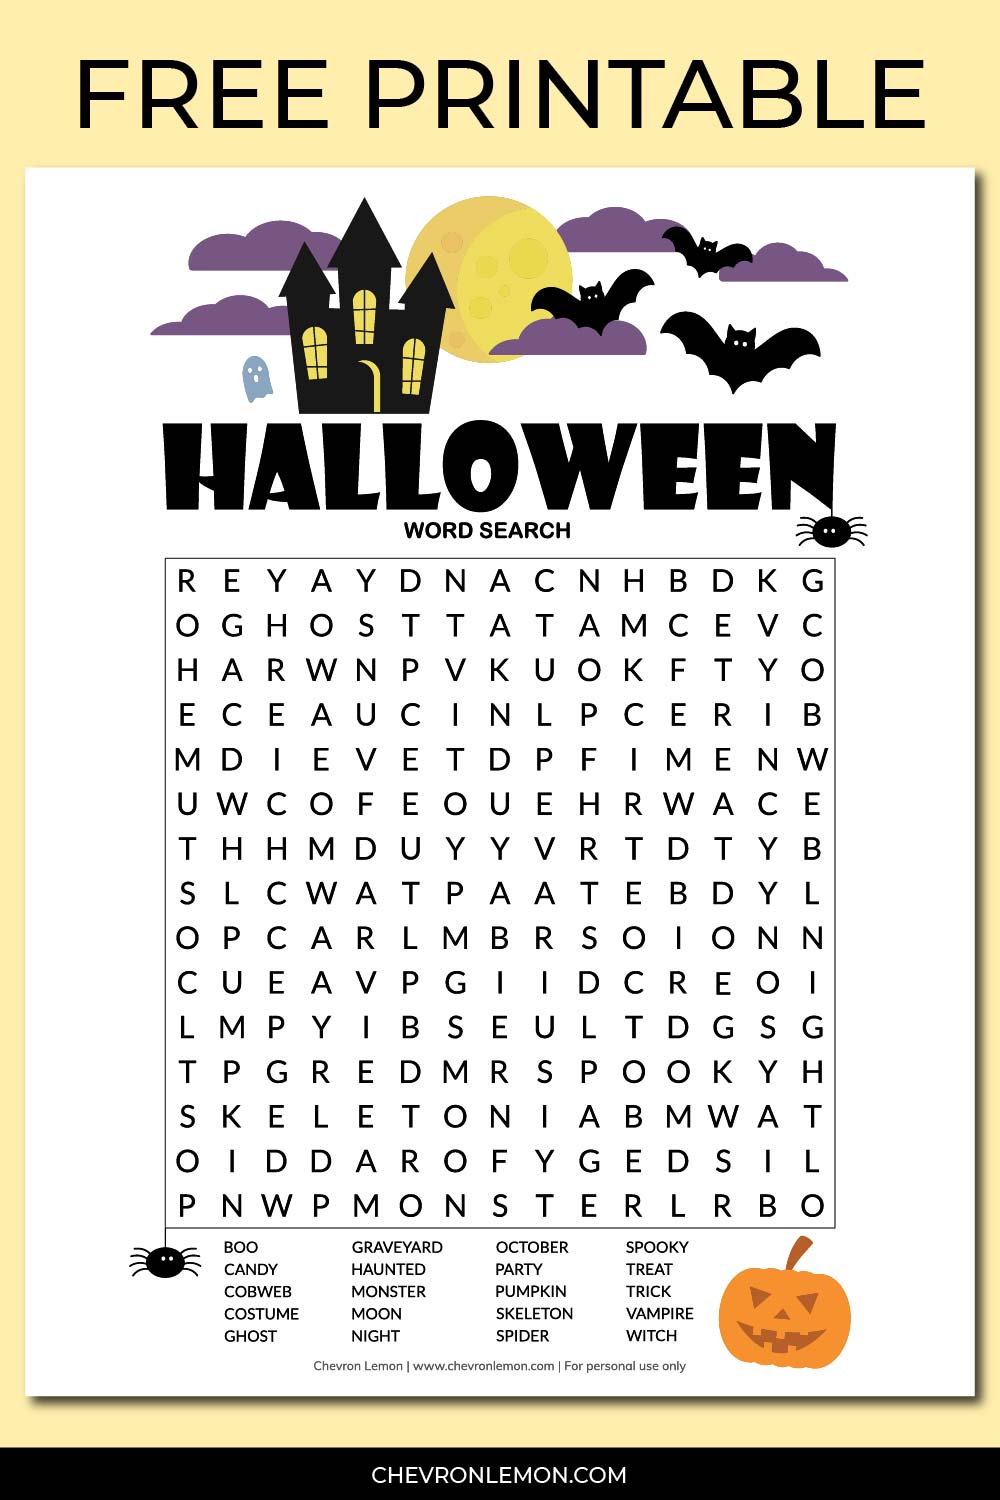 free-printable-halloween-word-search-puzzle-chevron-lemon